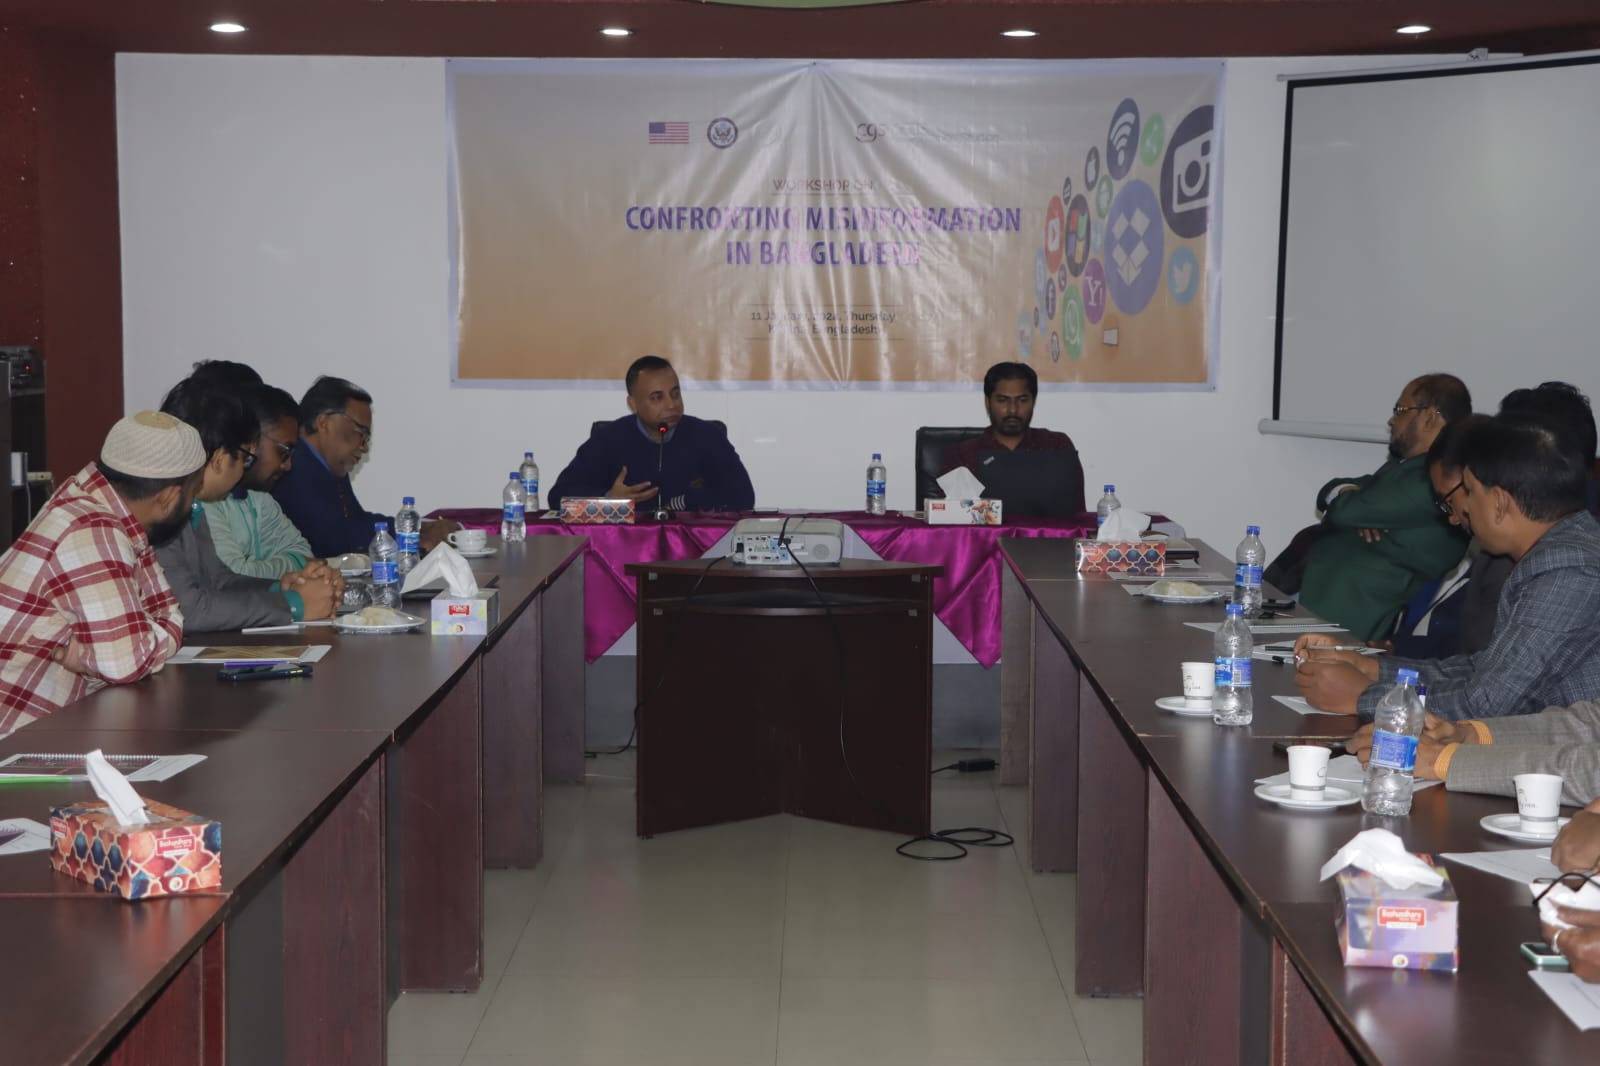 Workshop on Confronting Misinformation in Bangladesh | Khulna